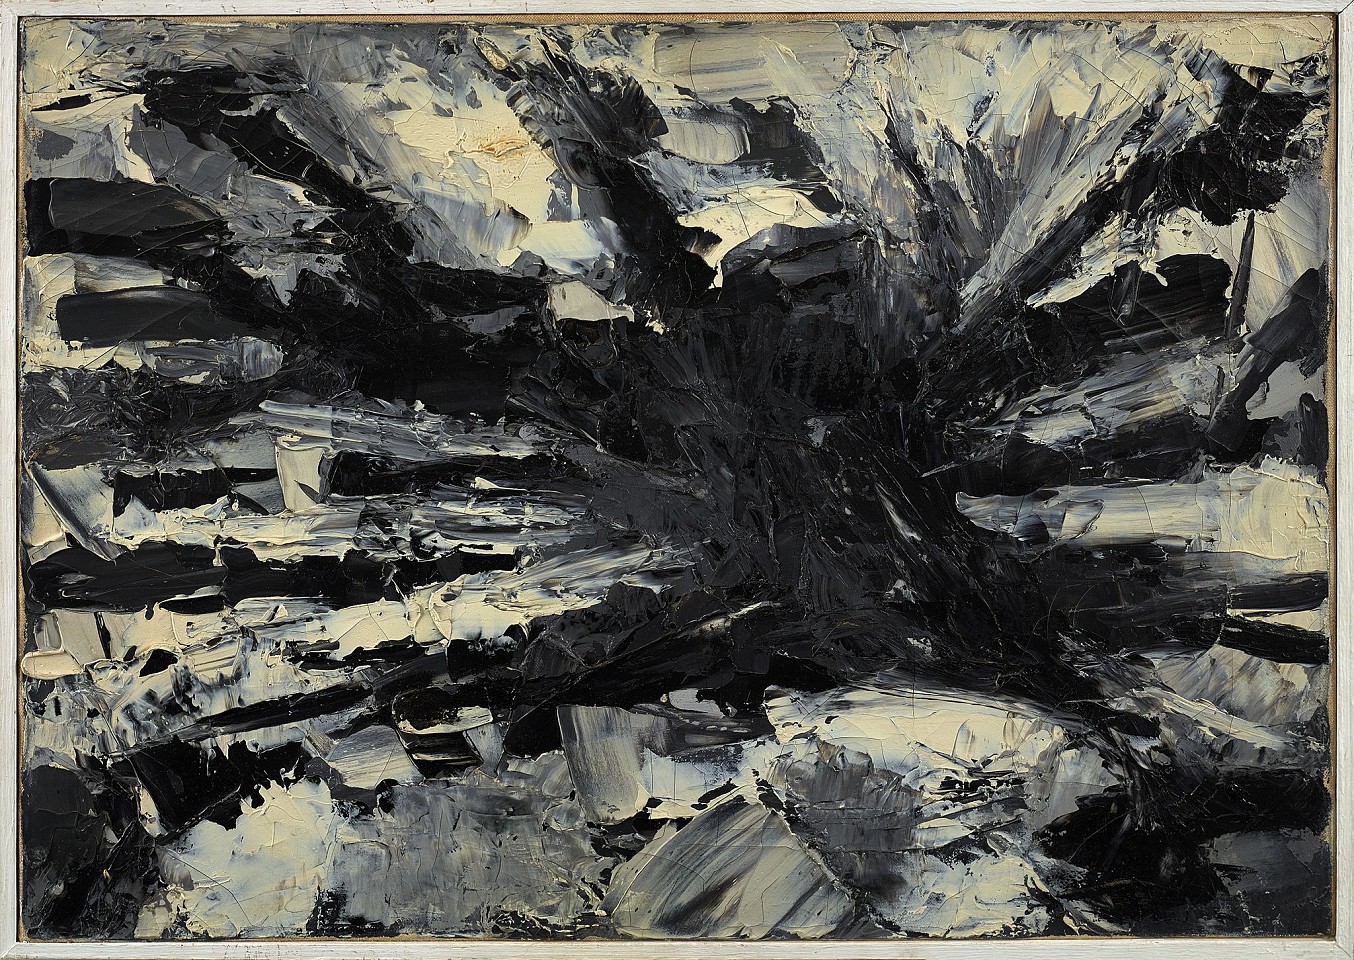 Raymond Hendler, No. 4, 1952
Oil on canvas, 16 x 22 in. (40.6 x 55.9 cm)
HEN-00222